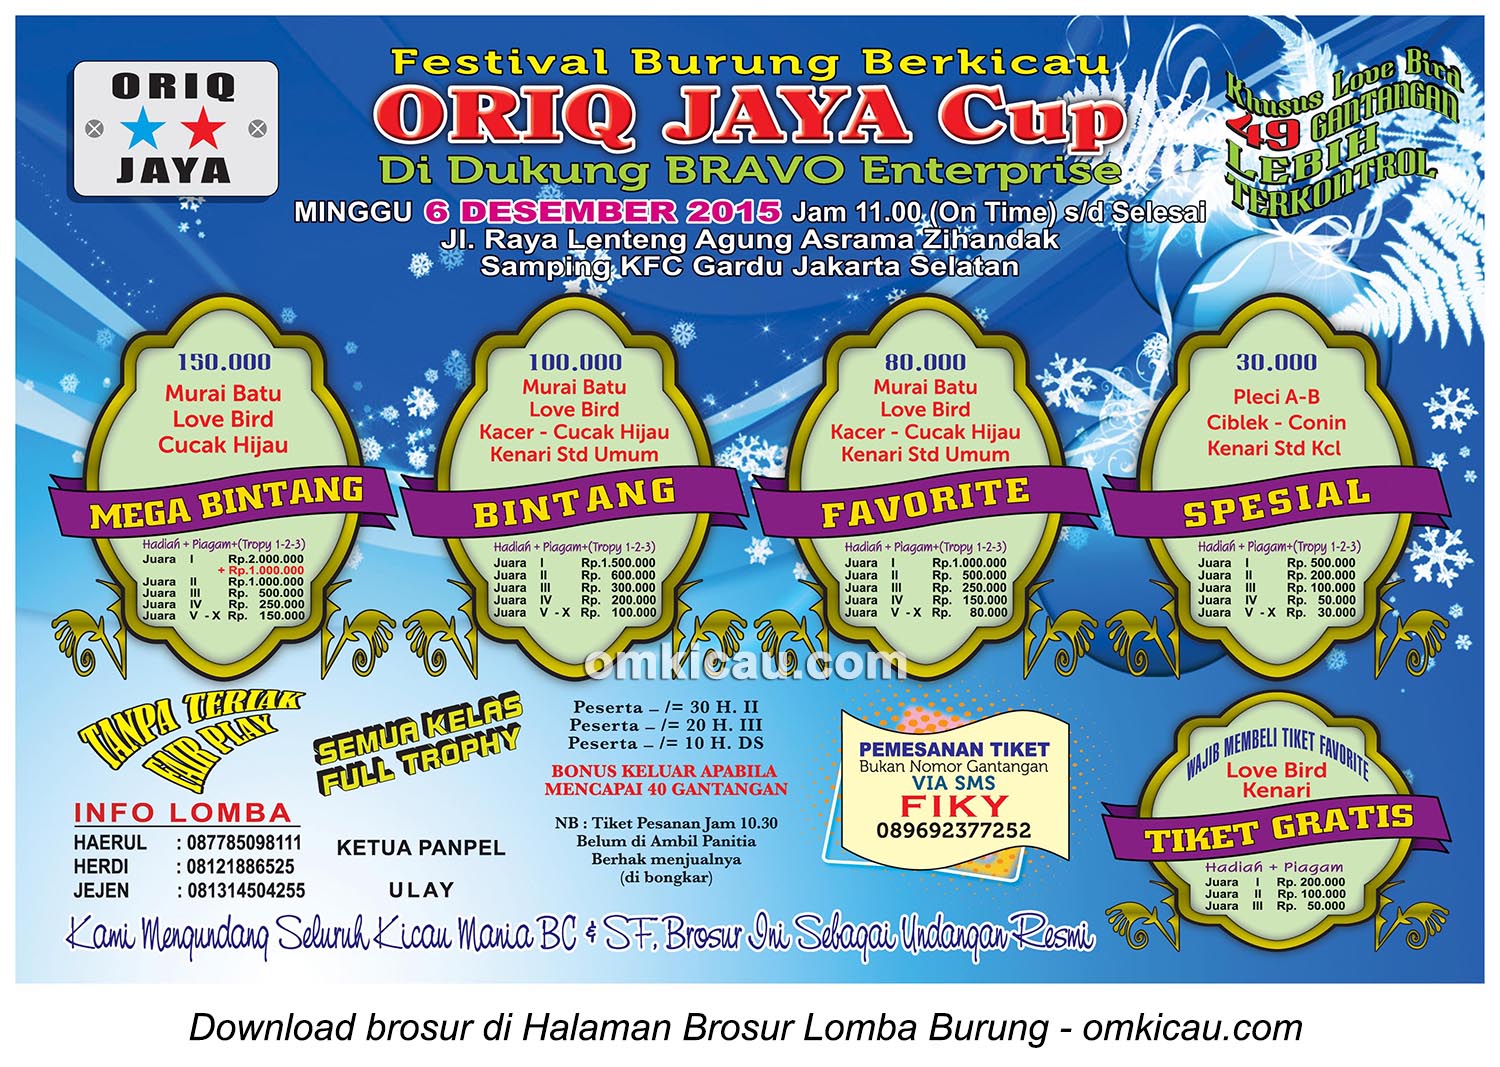 Brosur Festival Burung Berkicau Oriq Jaya Cup, Jakarta Selatan, 6 Desember 2015